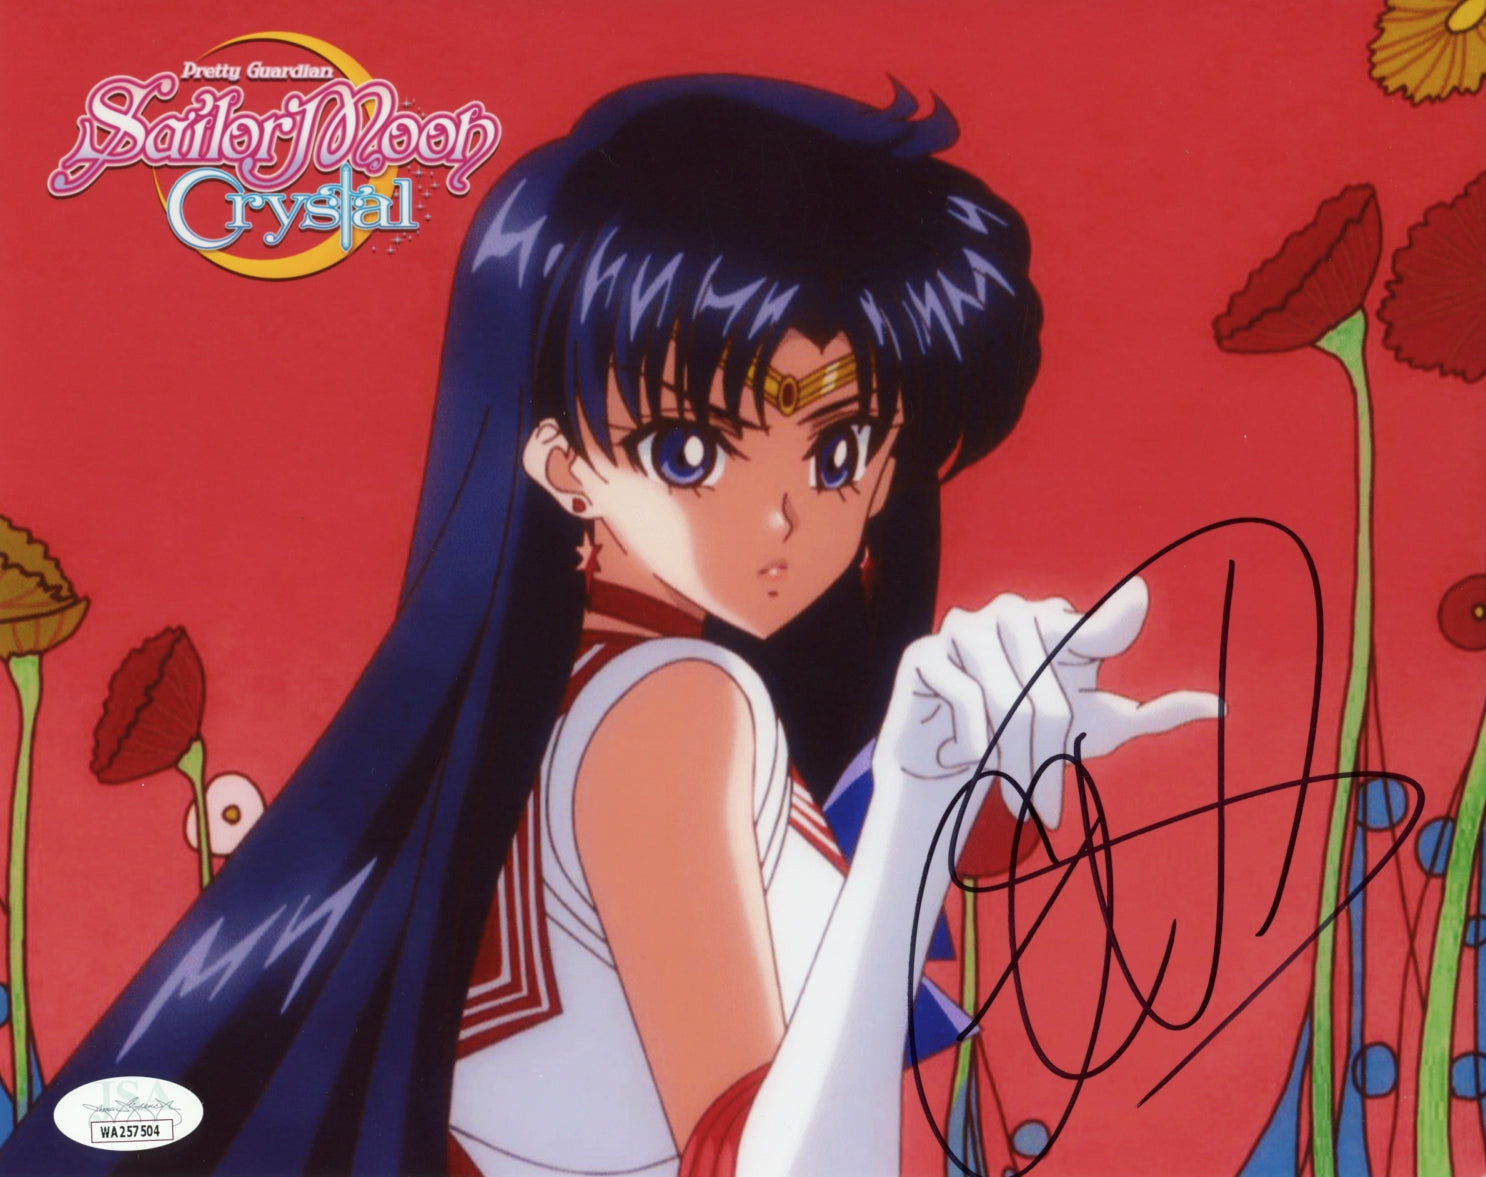 Cristina Vee Sailor Moon Crystal 8x10 Signed Photo JSA COA Certified Autograph